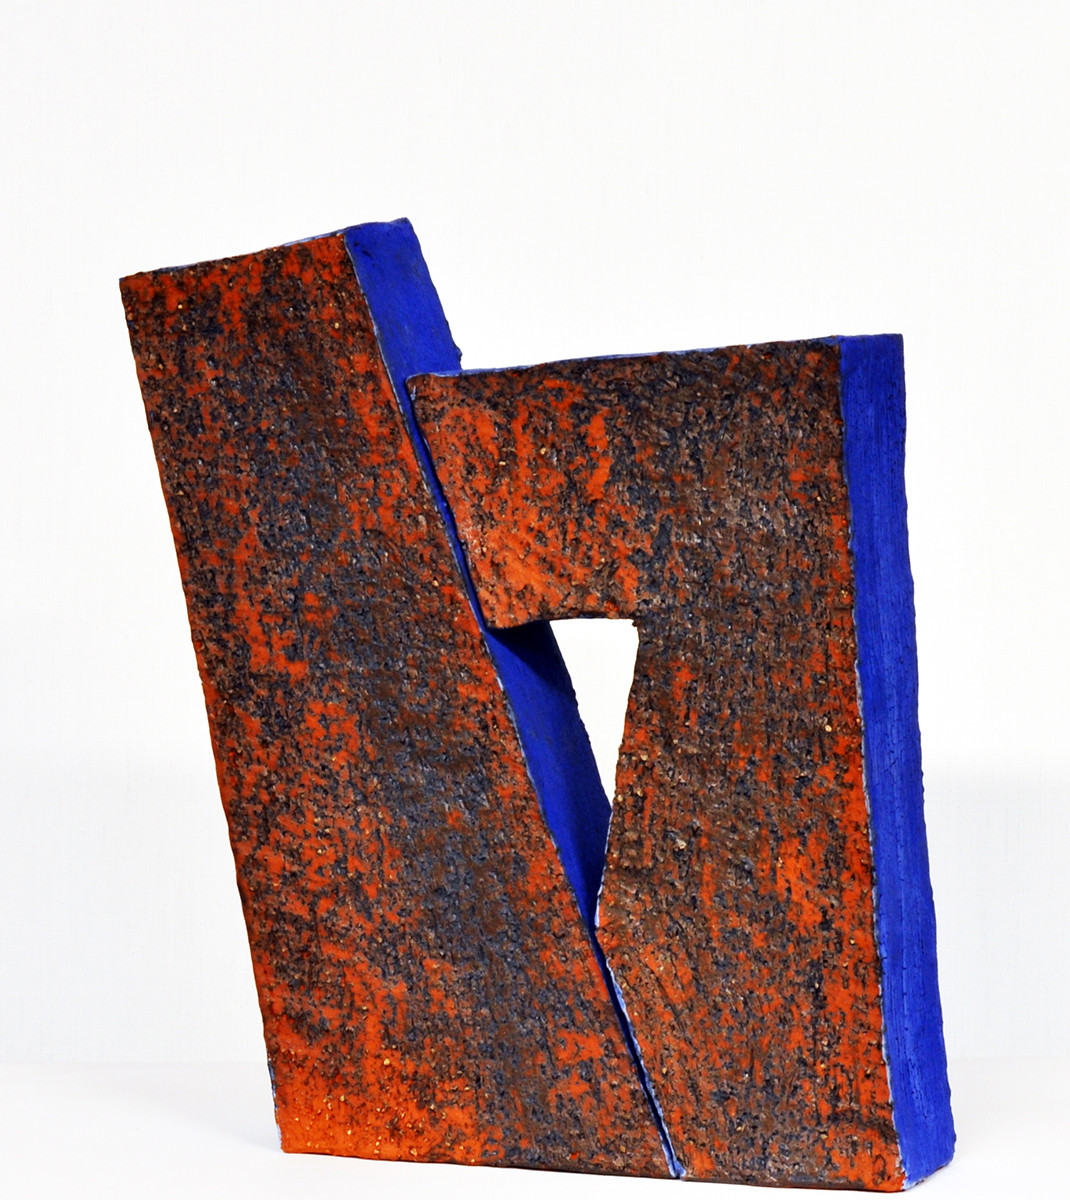 Colja de Roo + Leunend object, rood en blauw